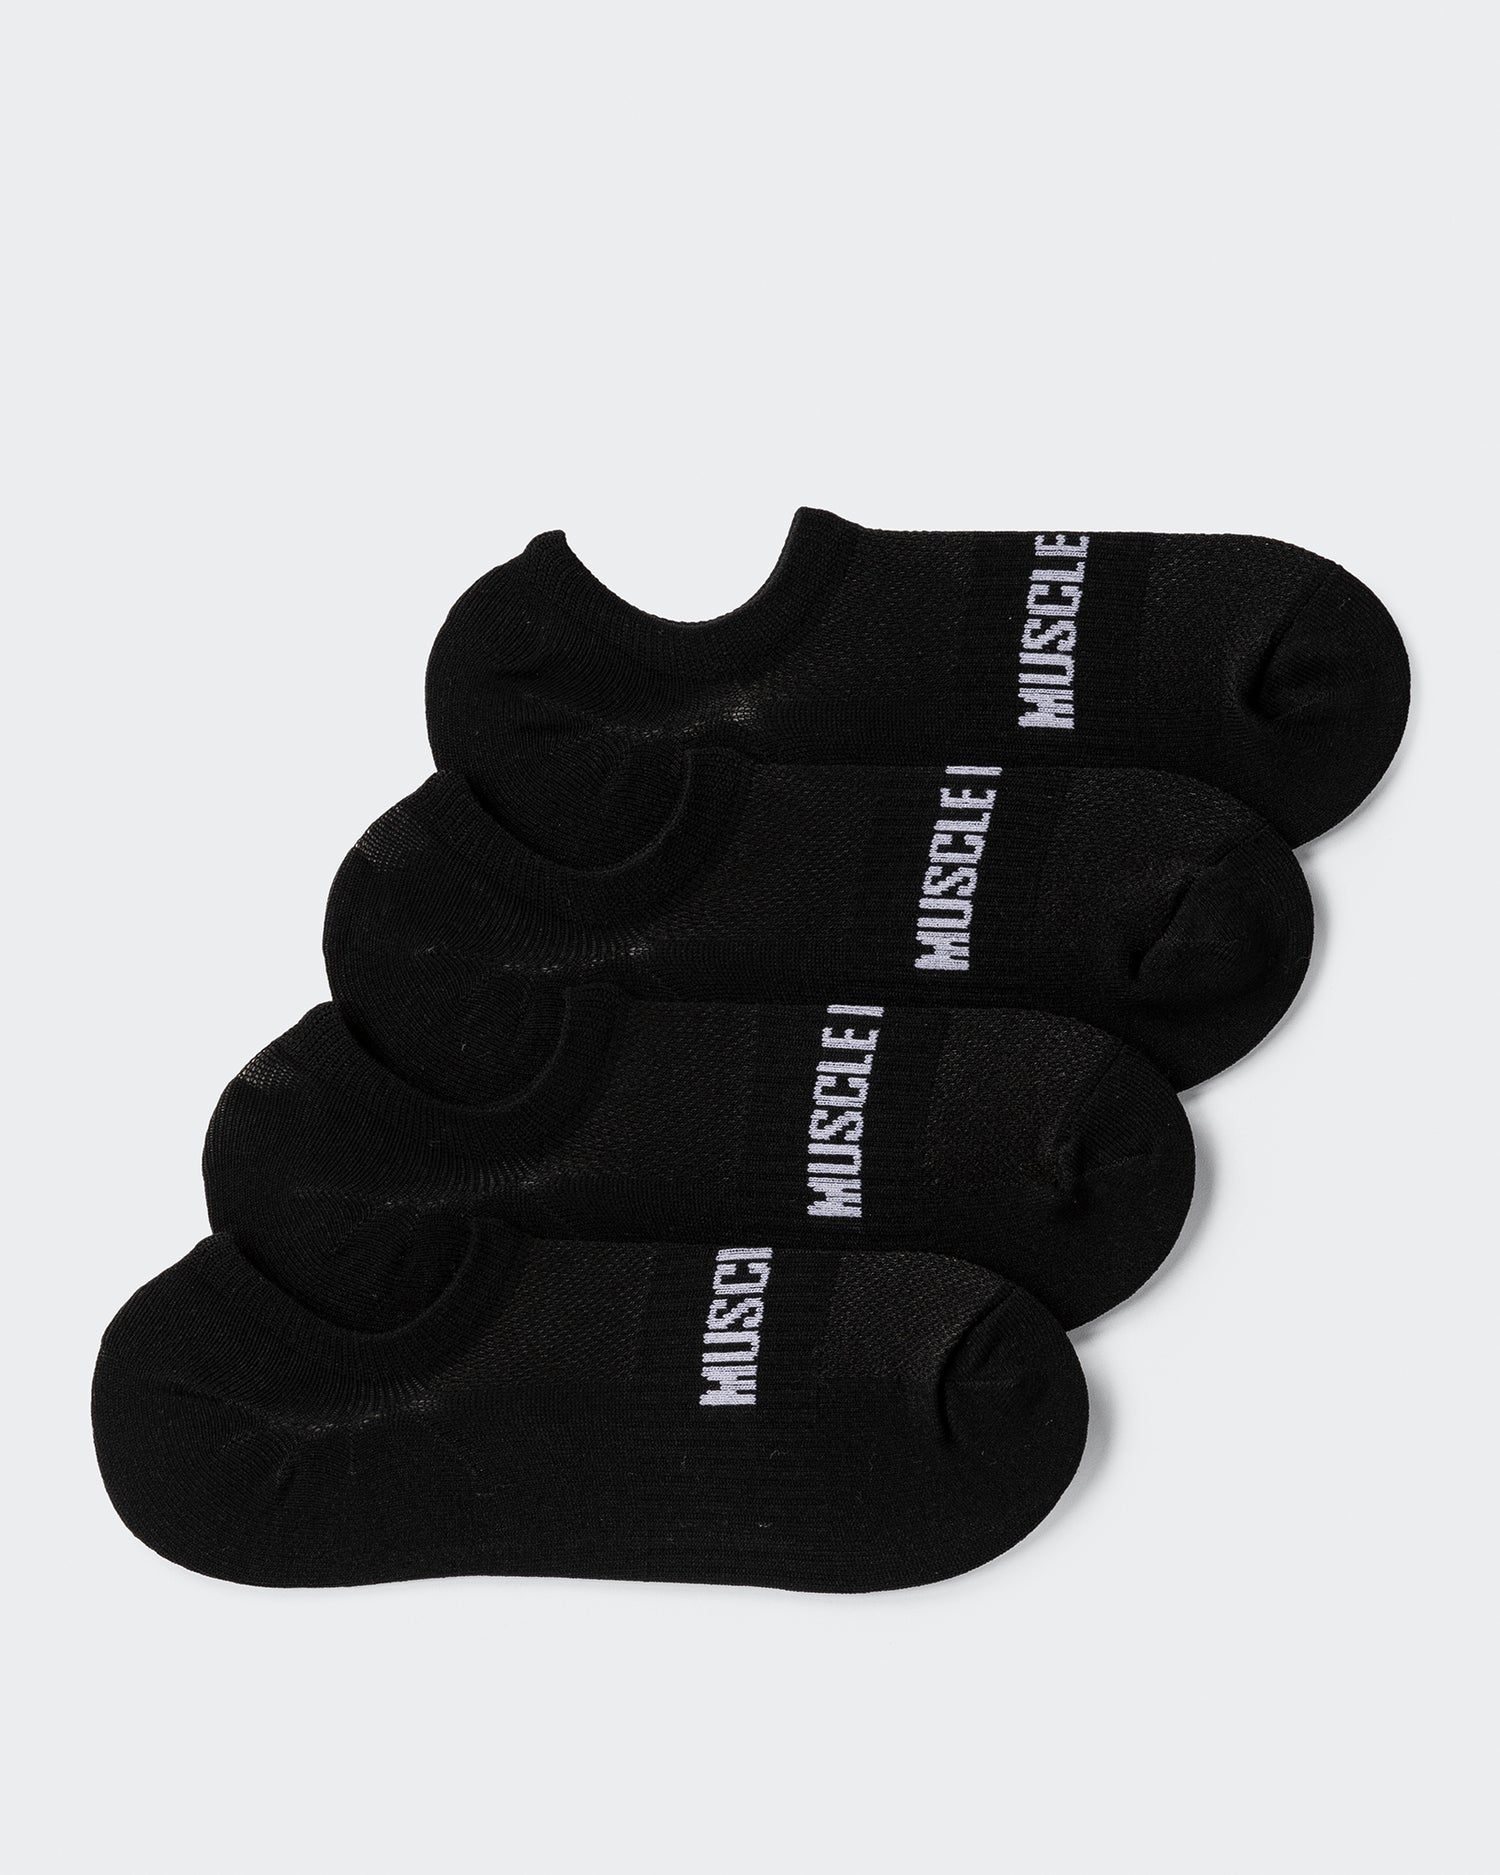 Mens Low Cut No Show Socks - Black (2 Pack)